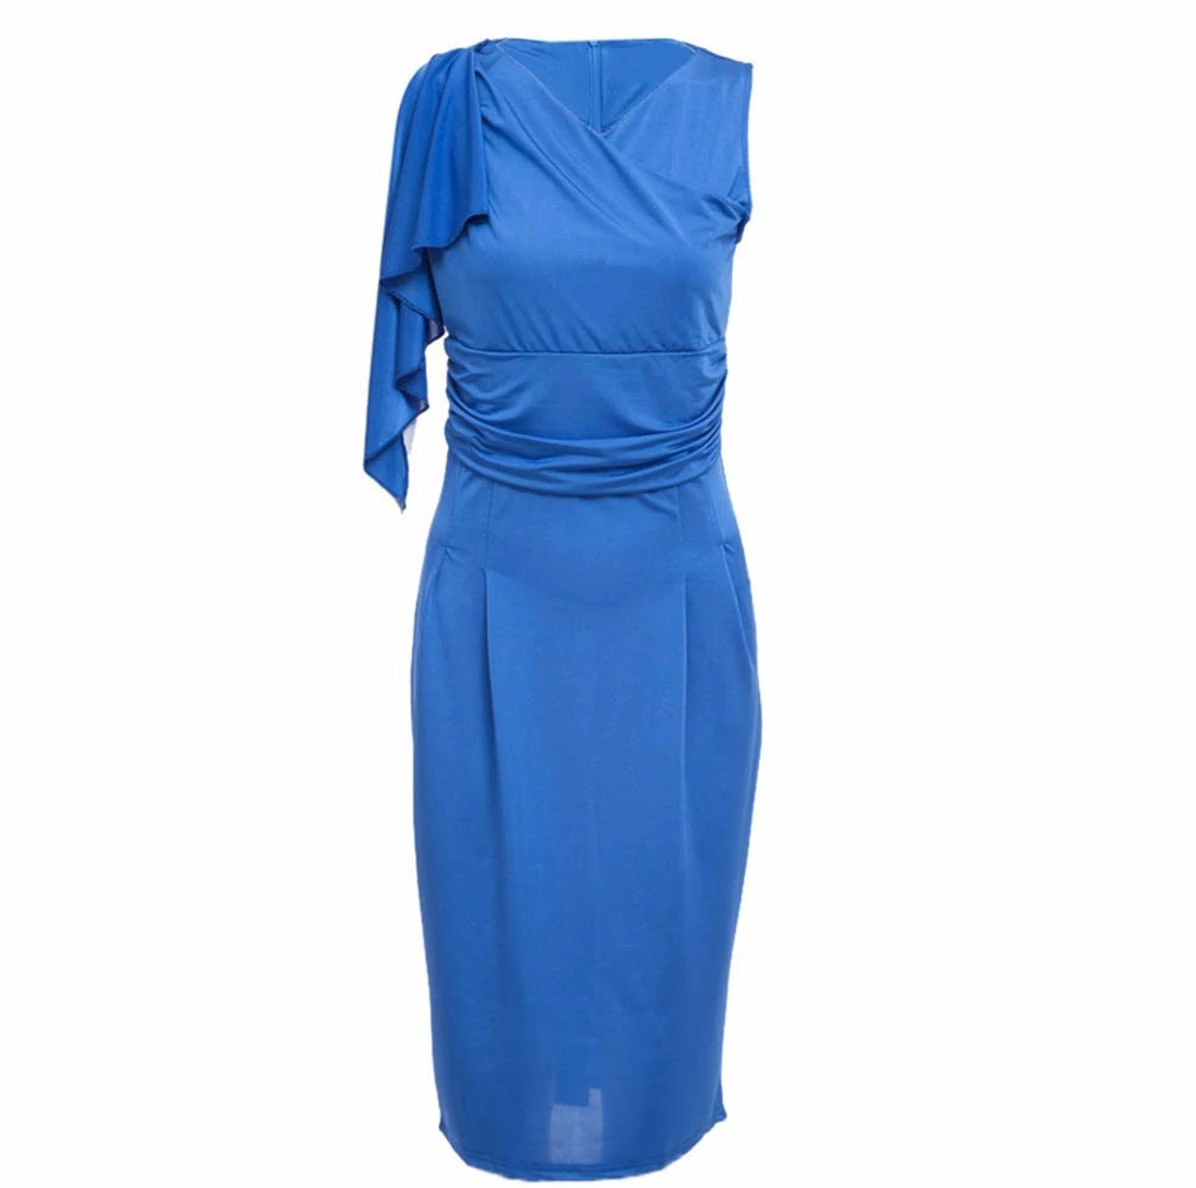 M0188 blue2 Short Sleeve Dresses maureens.com boutique